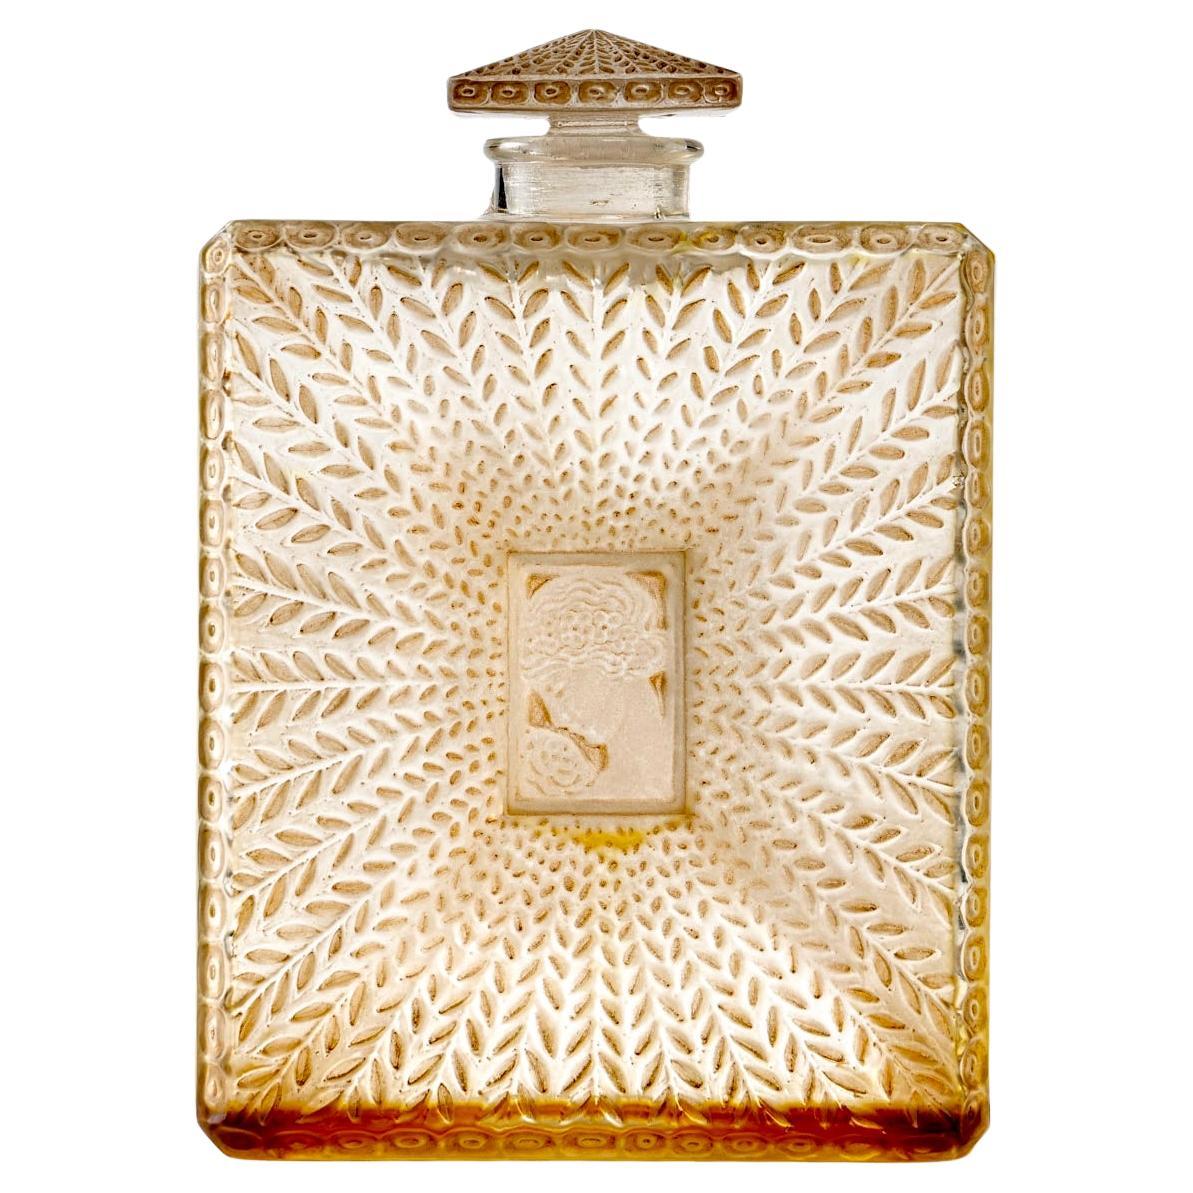 1925 Rene Lalique La Belle Saison Houbigant Perfume Bottle Sepia Stained Glass